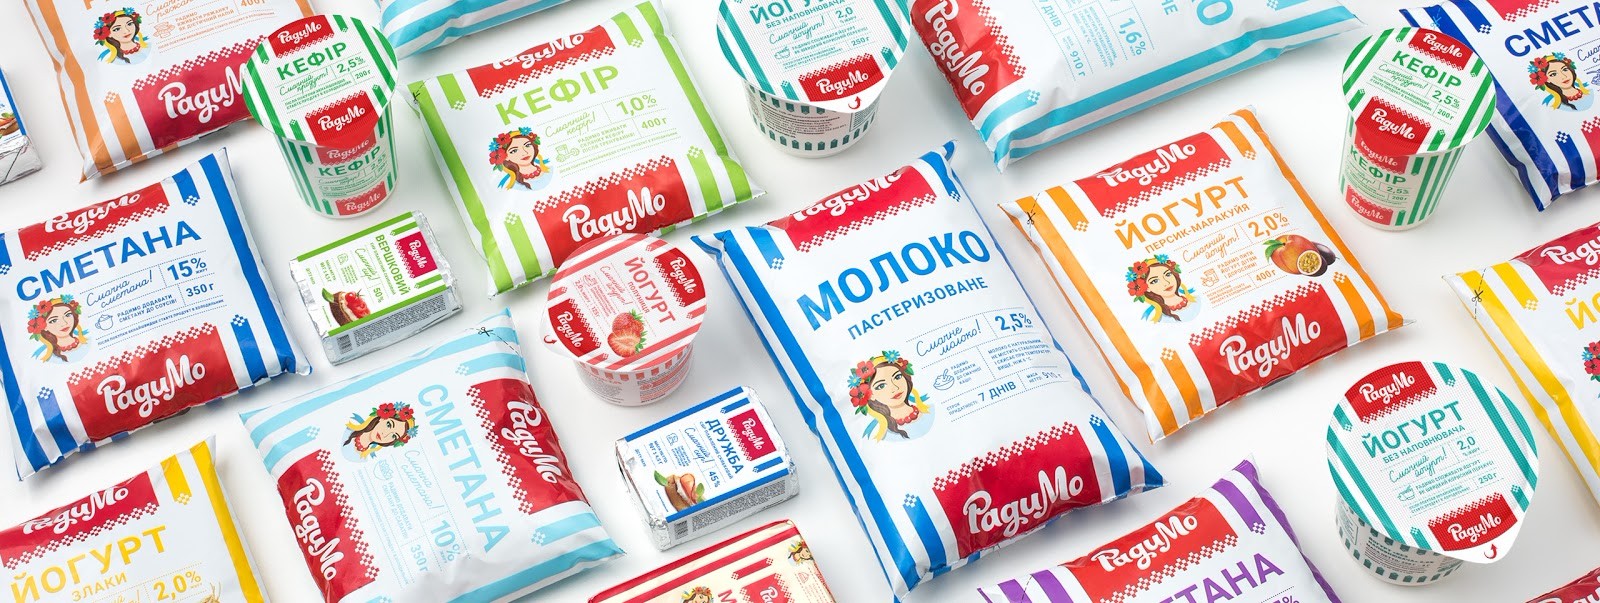 Radymo酸奶包装设计欣赏(图2)